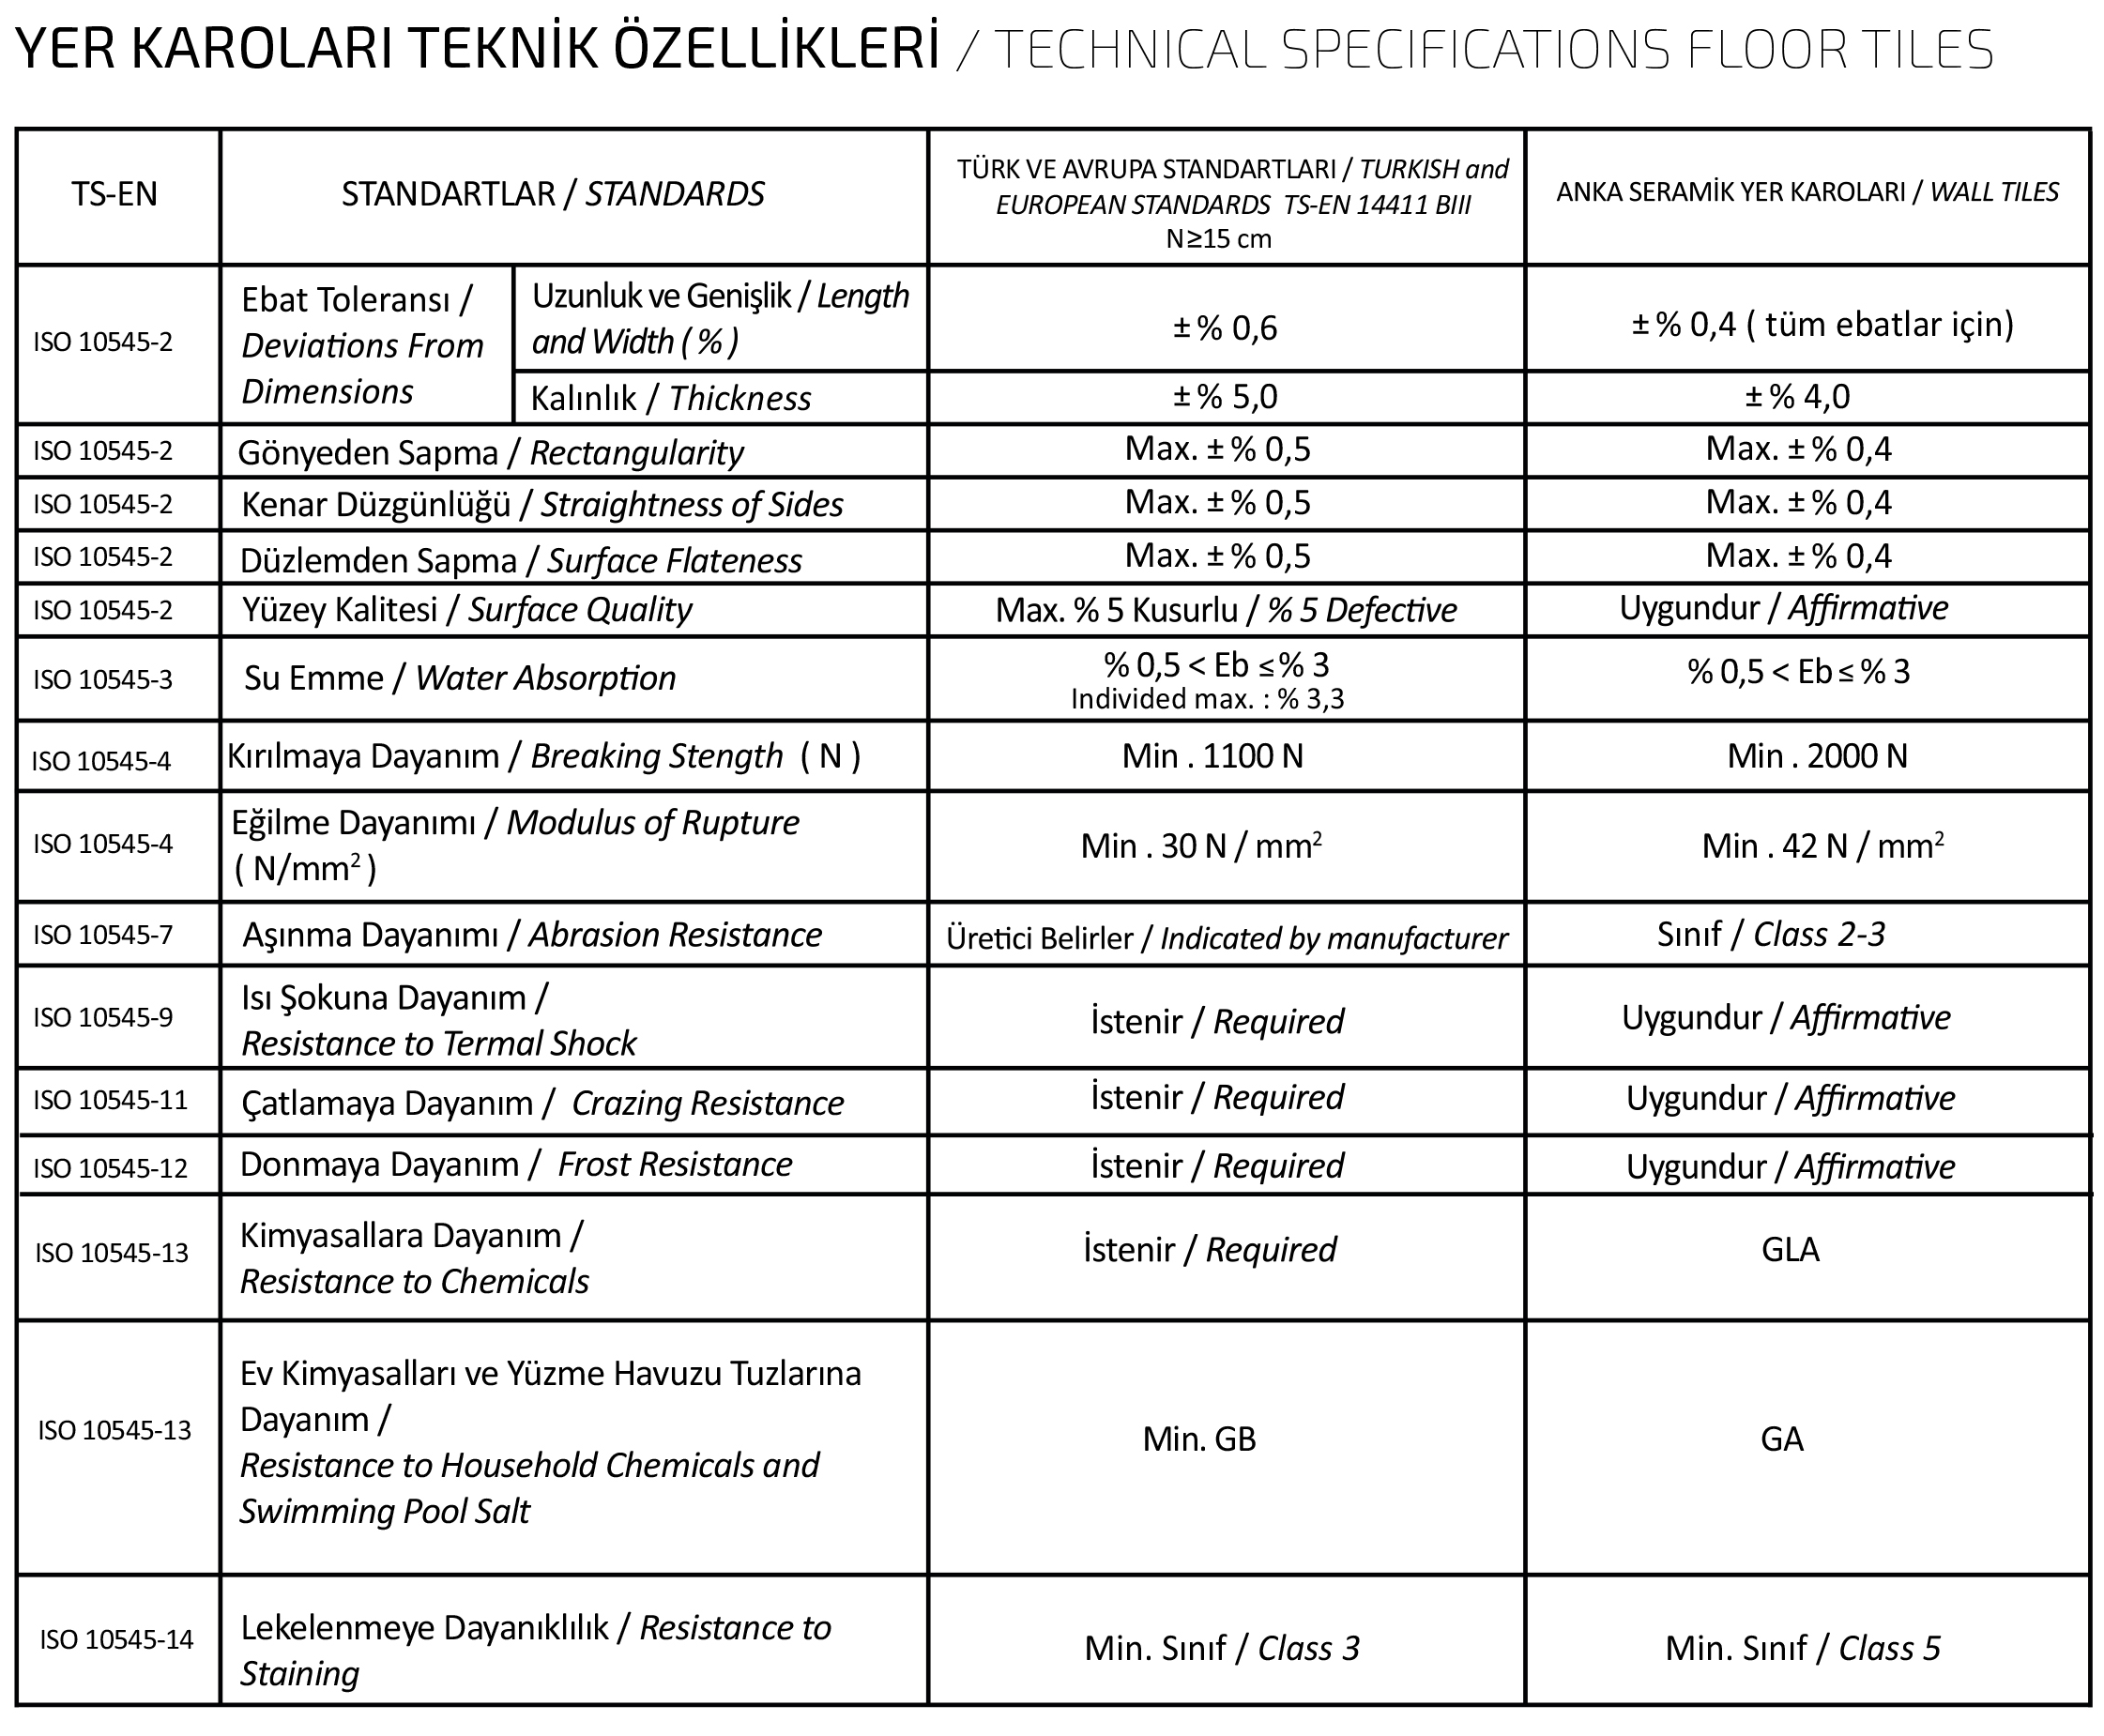 Anka Seramik Wall Tiles Techinical Details